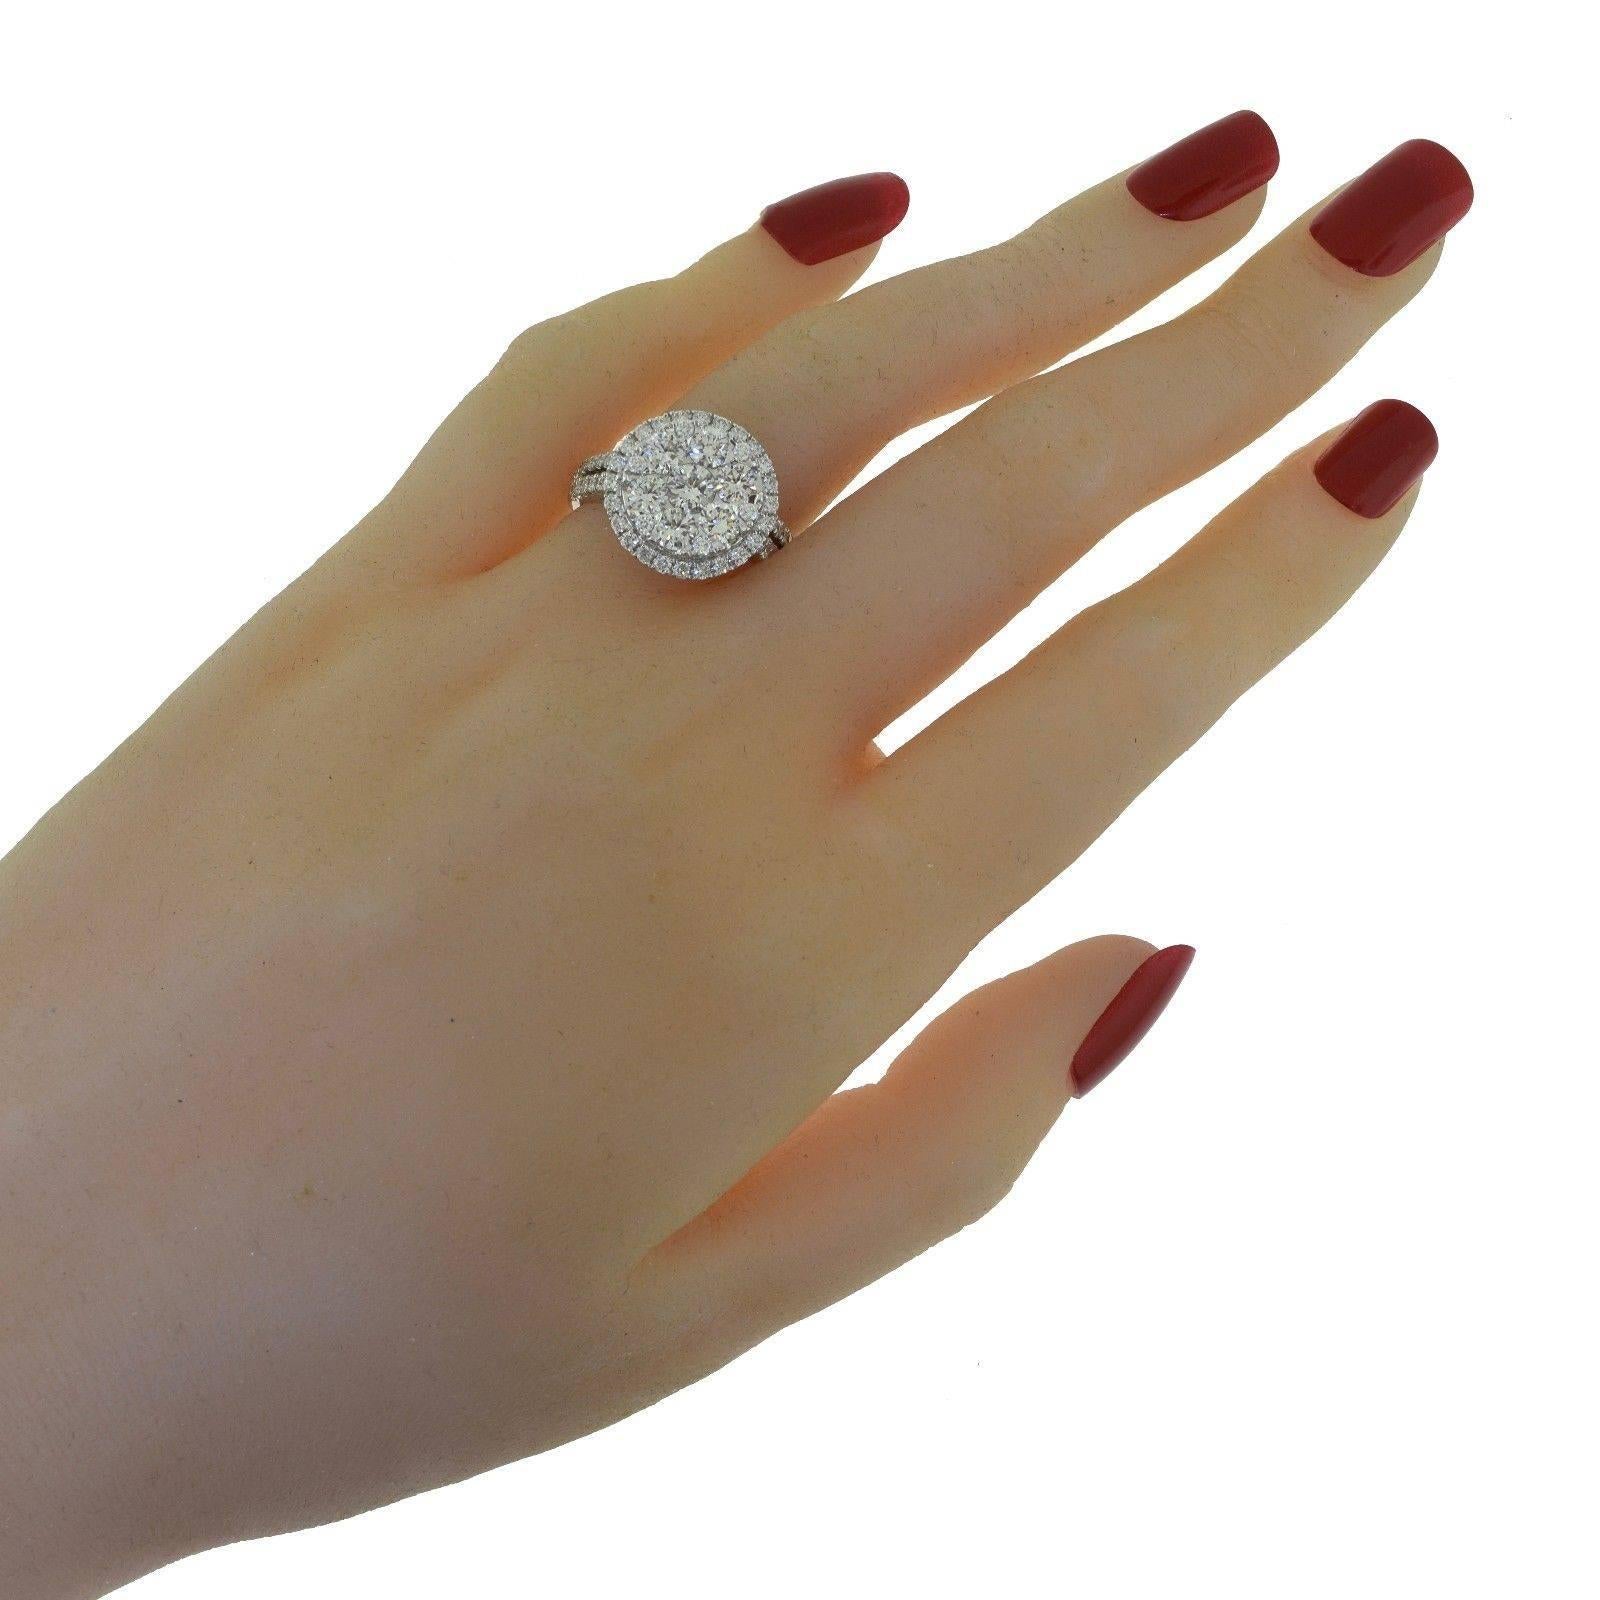 Style: Round Diamond Halo Ring 
Metal: White Gold
Metal Purity: 18k
Stones: 1 Round Center Stone Diamond = 0.30 ct ; 6 Round Center Diamonds = 1.06 ct ; 54 Small Round Diamonds = 0.84 ct
Diamond Color: F
Diamond Clarity: VVS
Total Carat Weight: 2.24